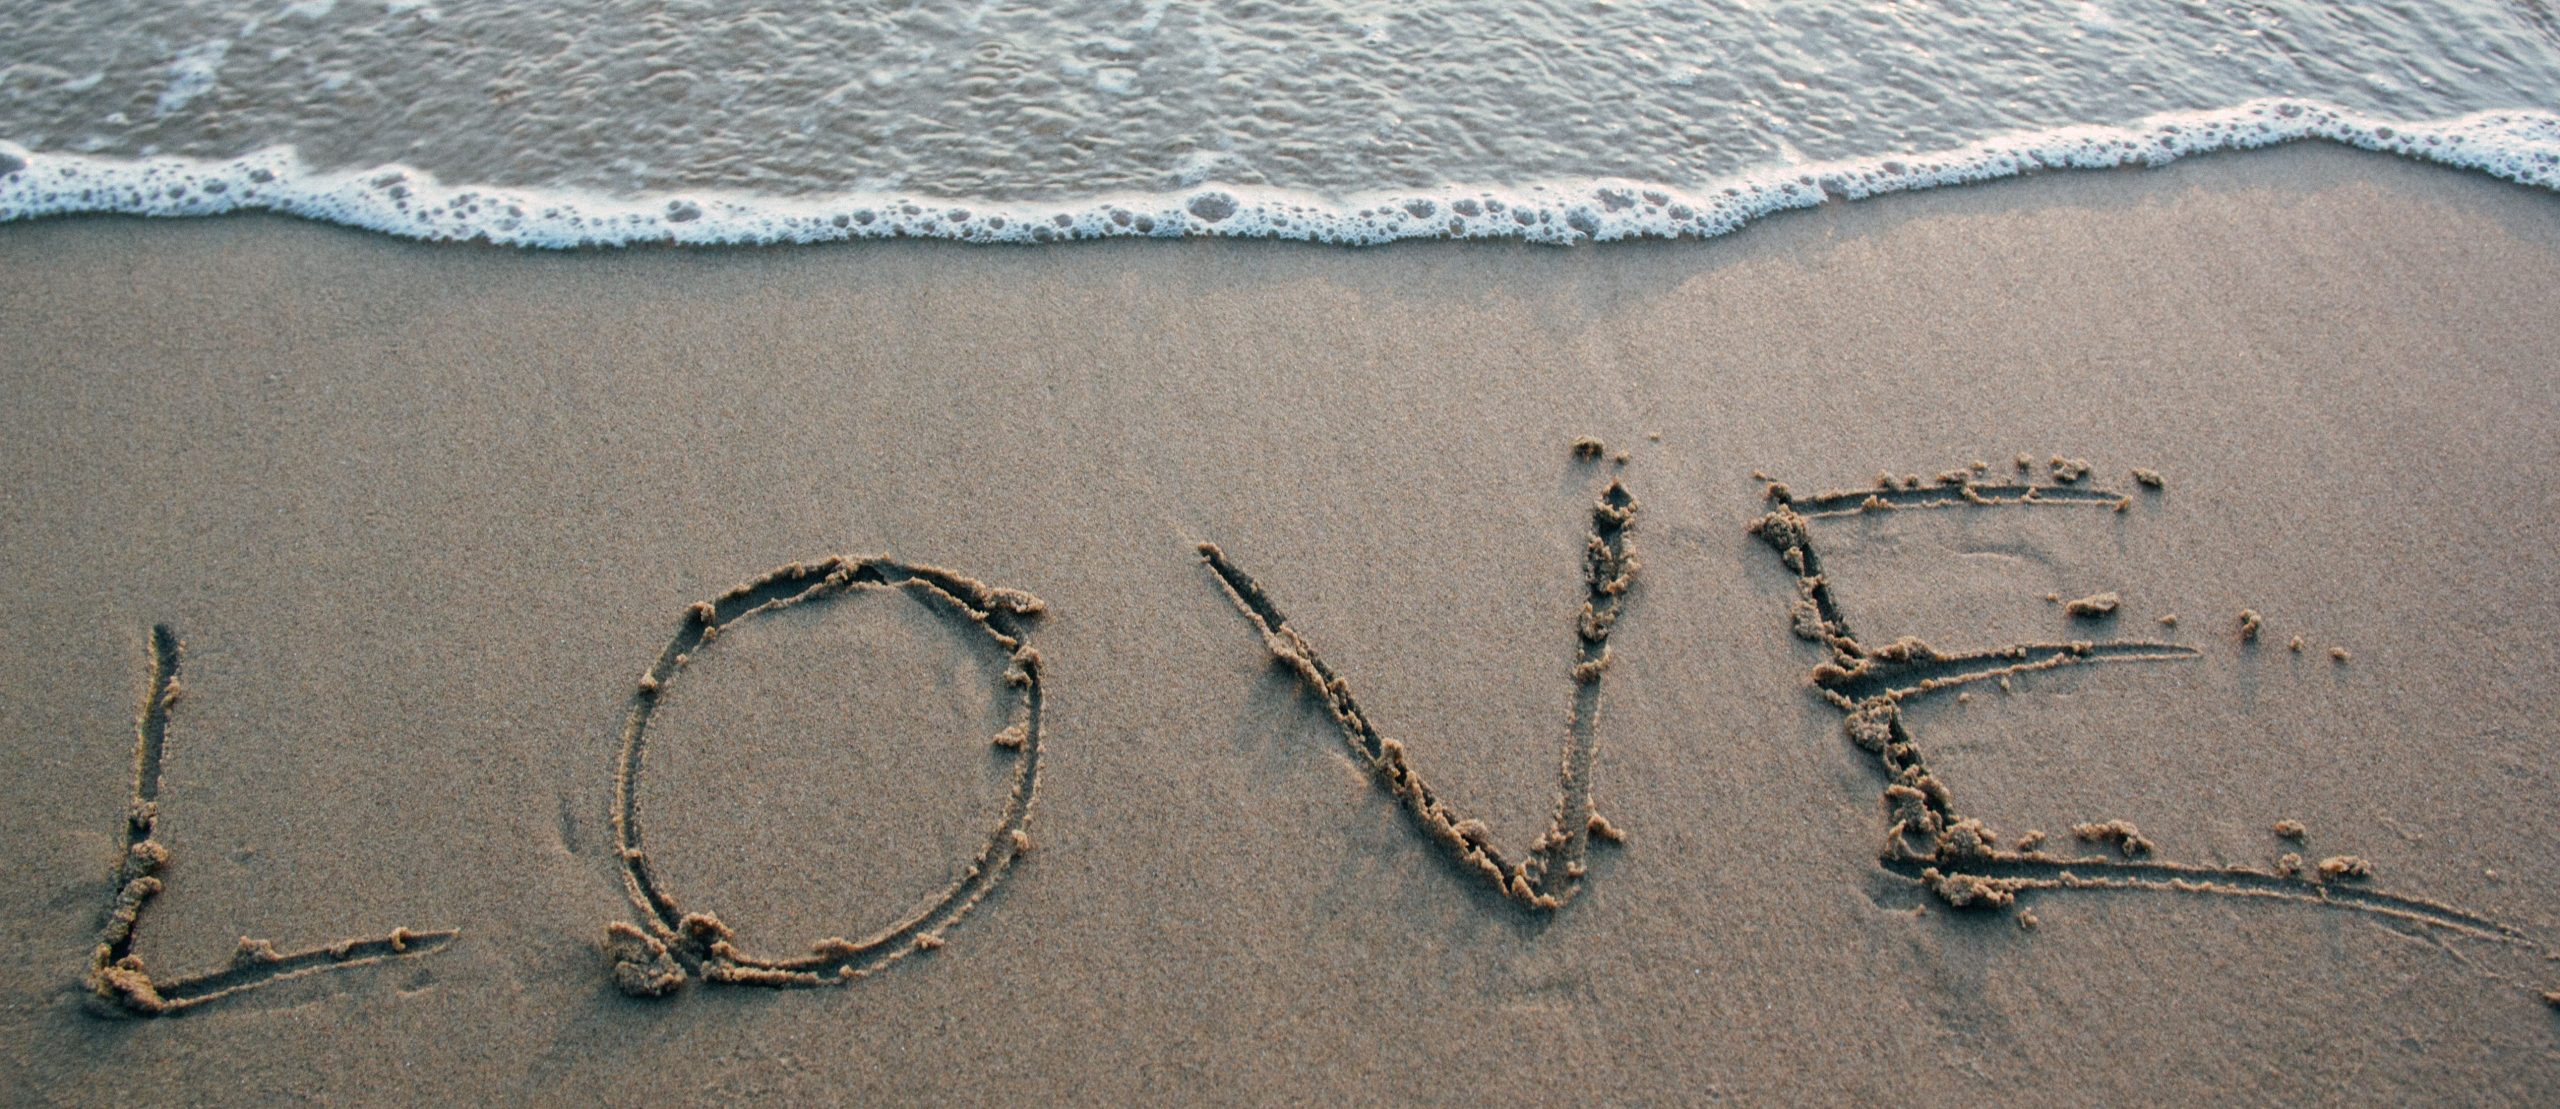 love-in-sand-pexels less